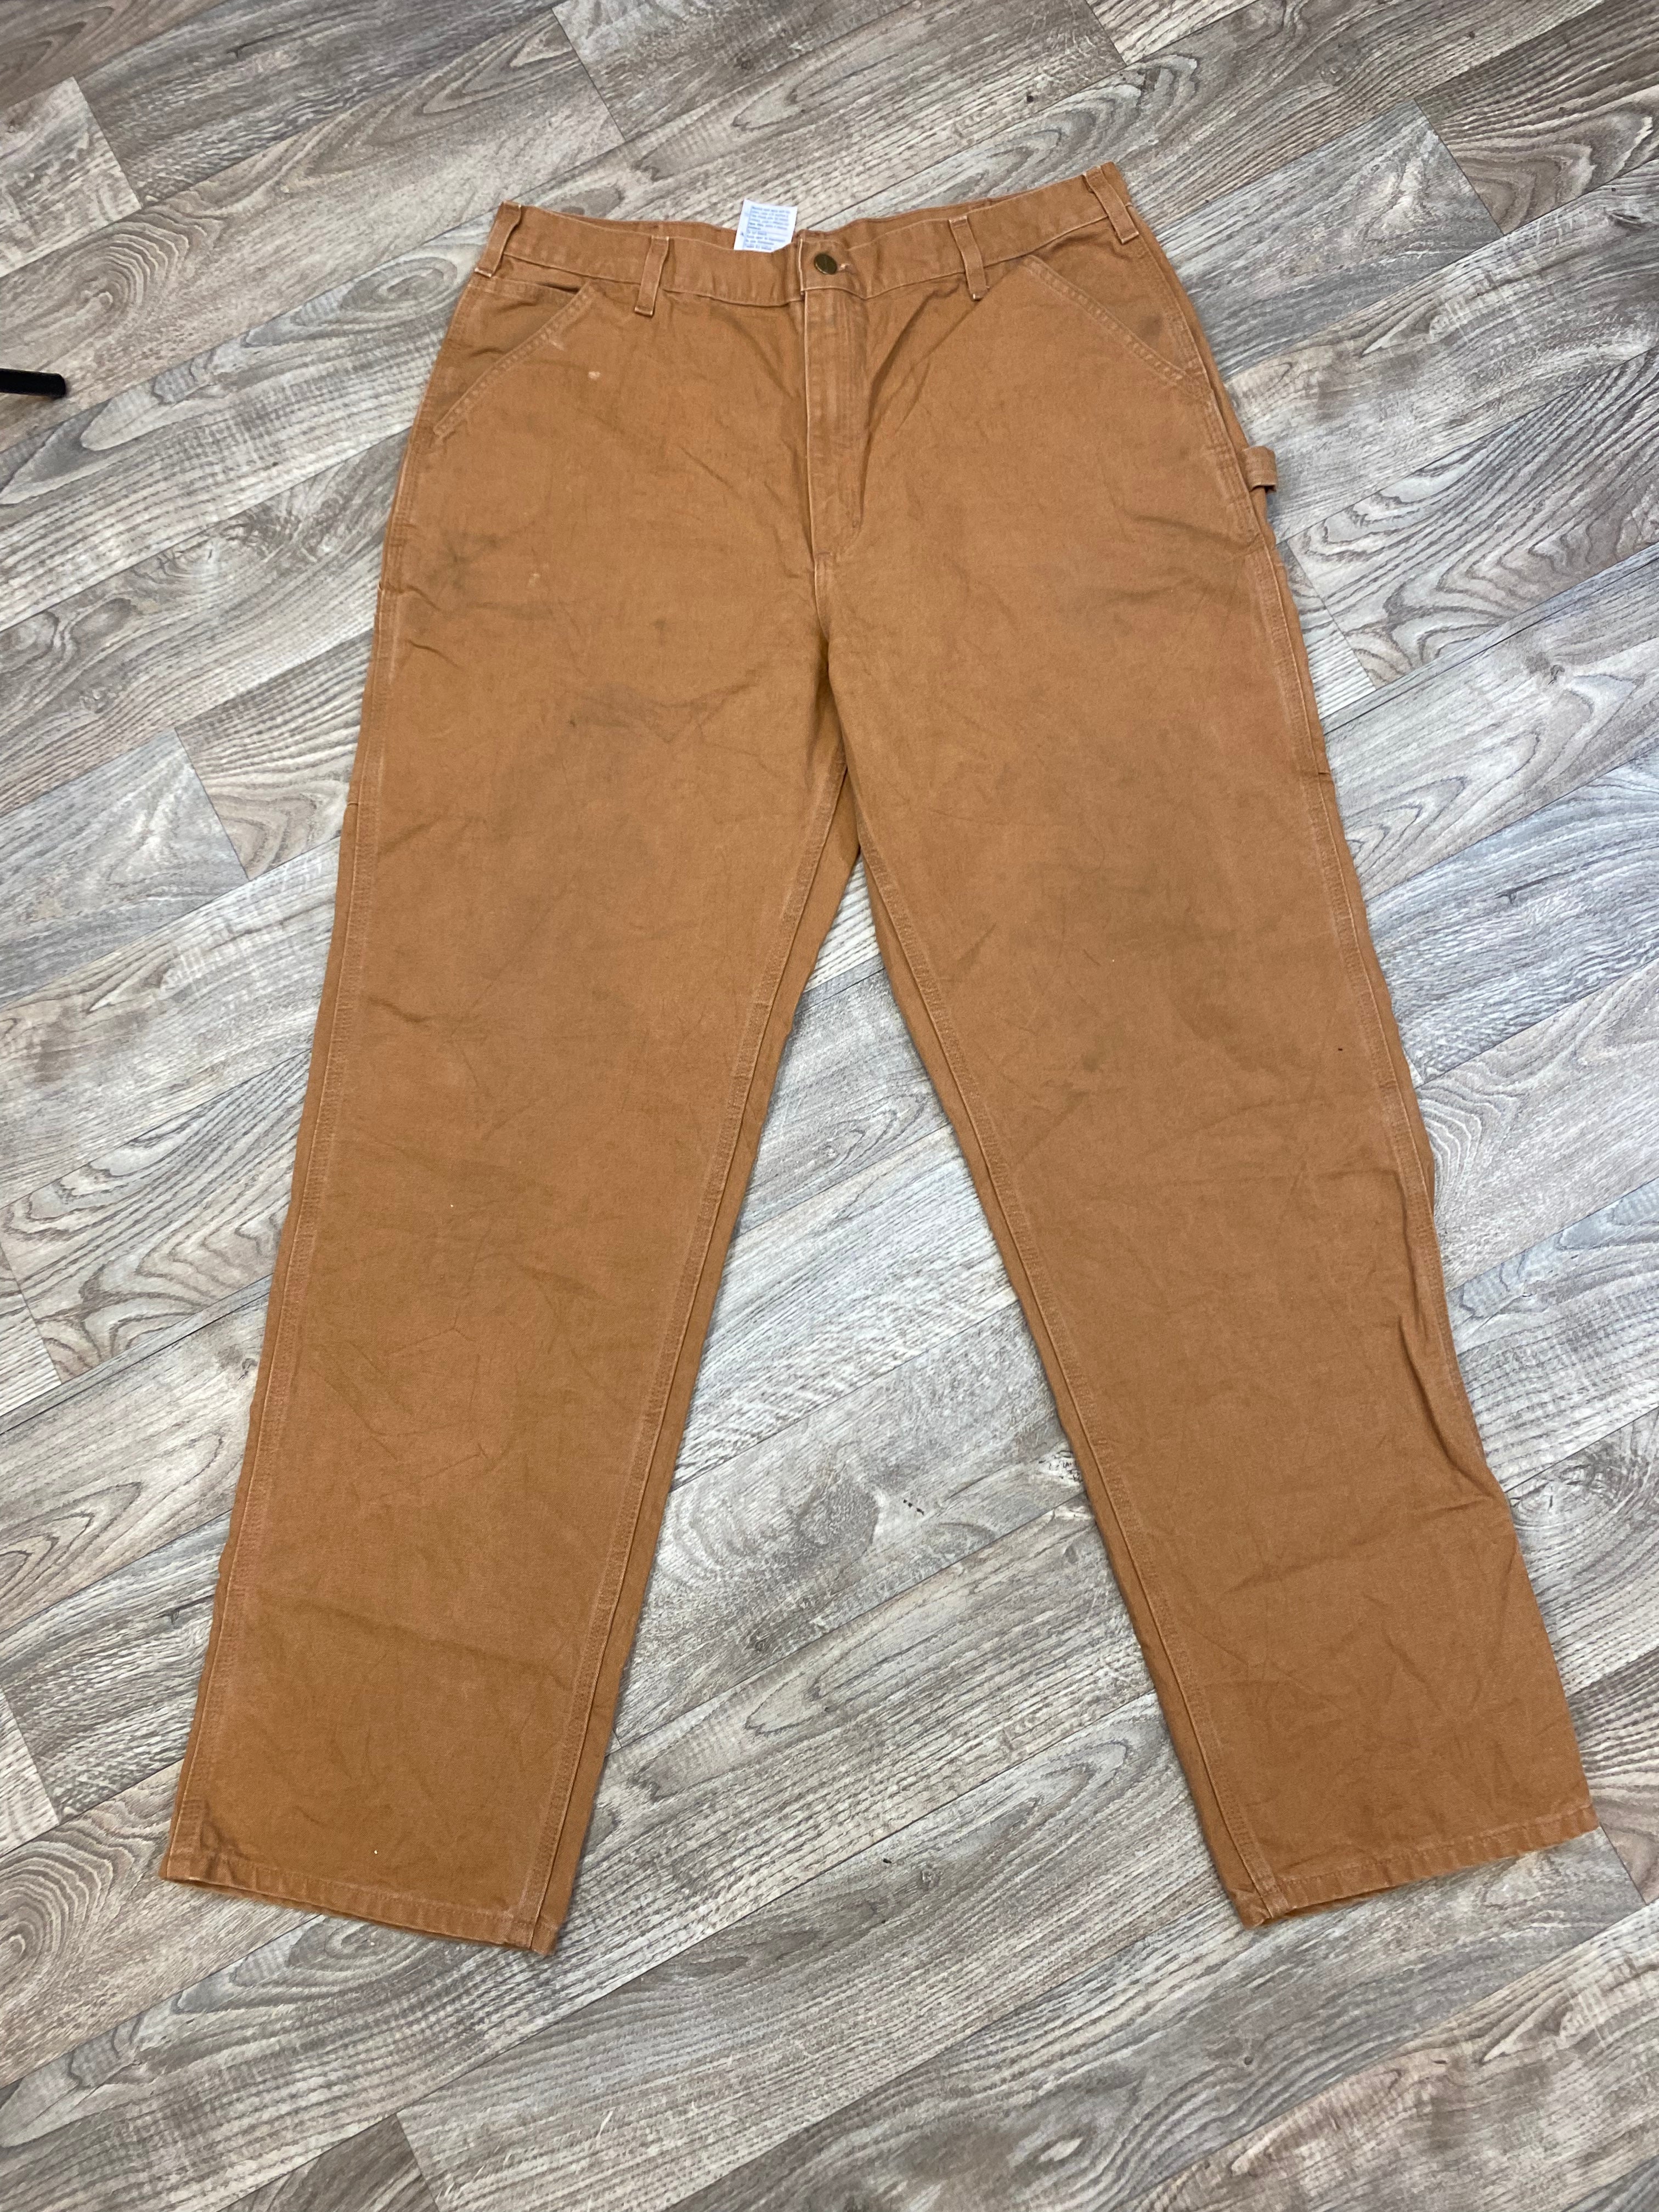 Vintage Carhartt Carpenter 38x34 Pants